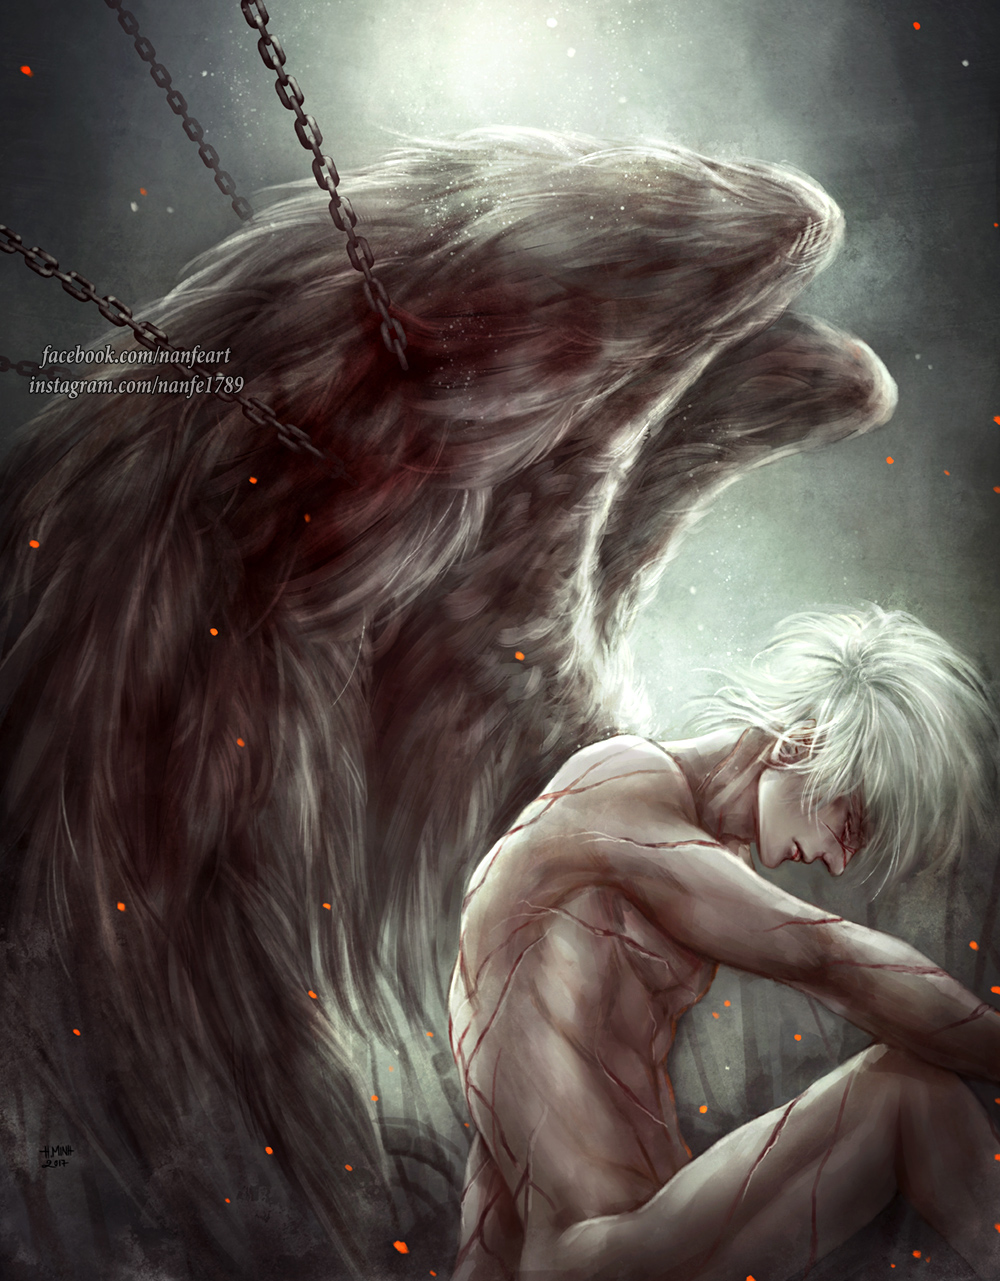 Фото Белокурый ангел, тело которого покрывают шрамы, прикован цепями, by NanFe